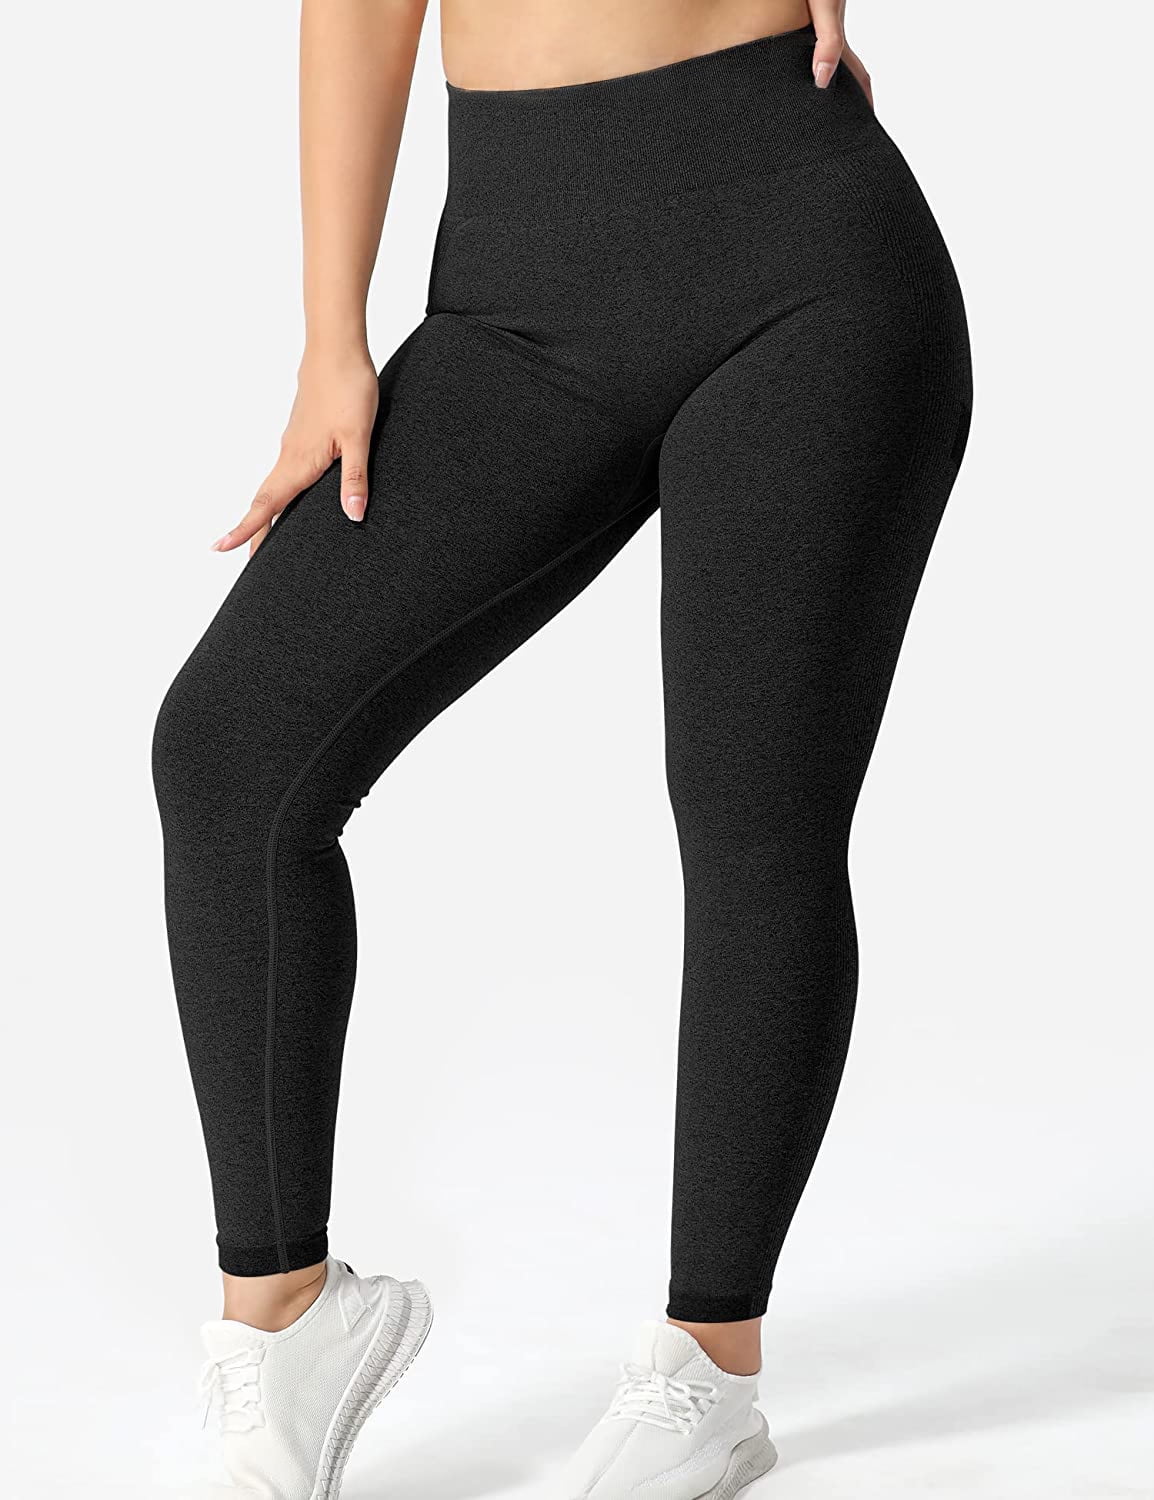 Zone pro leggings 3x plus black athletic pants gym stretchy stripe high  waist